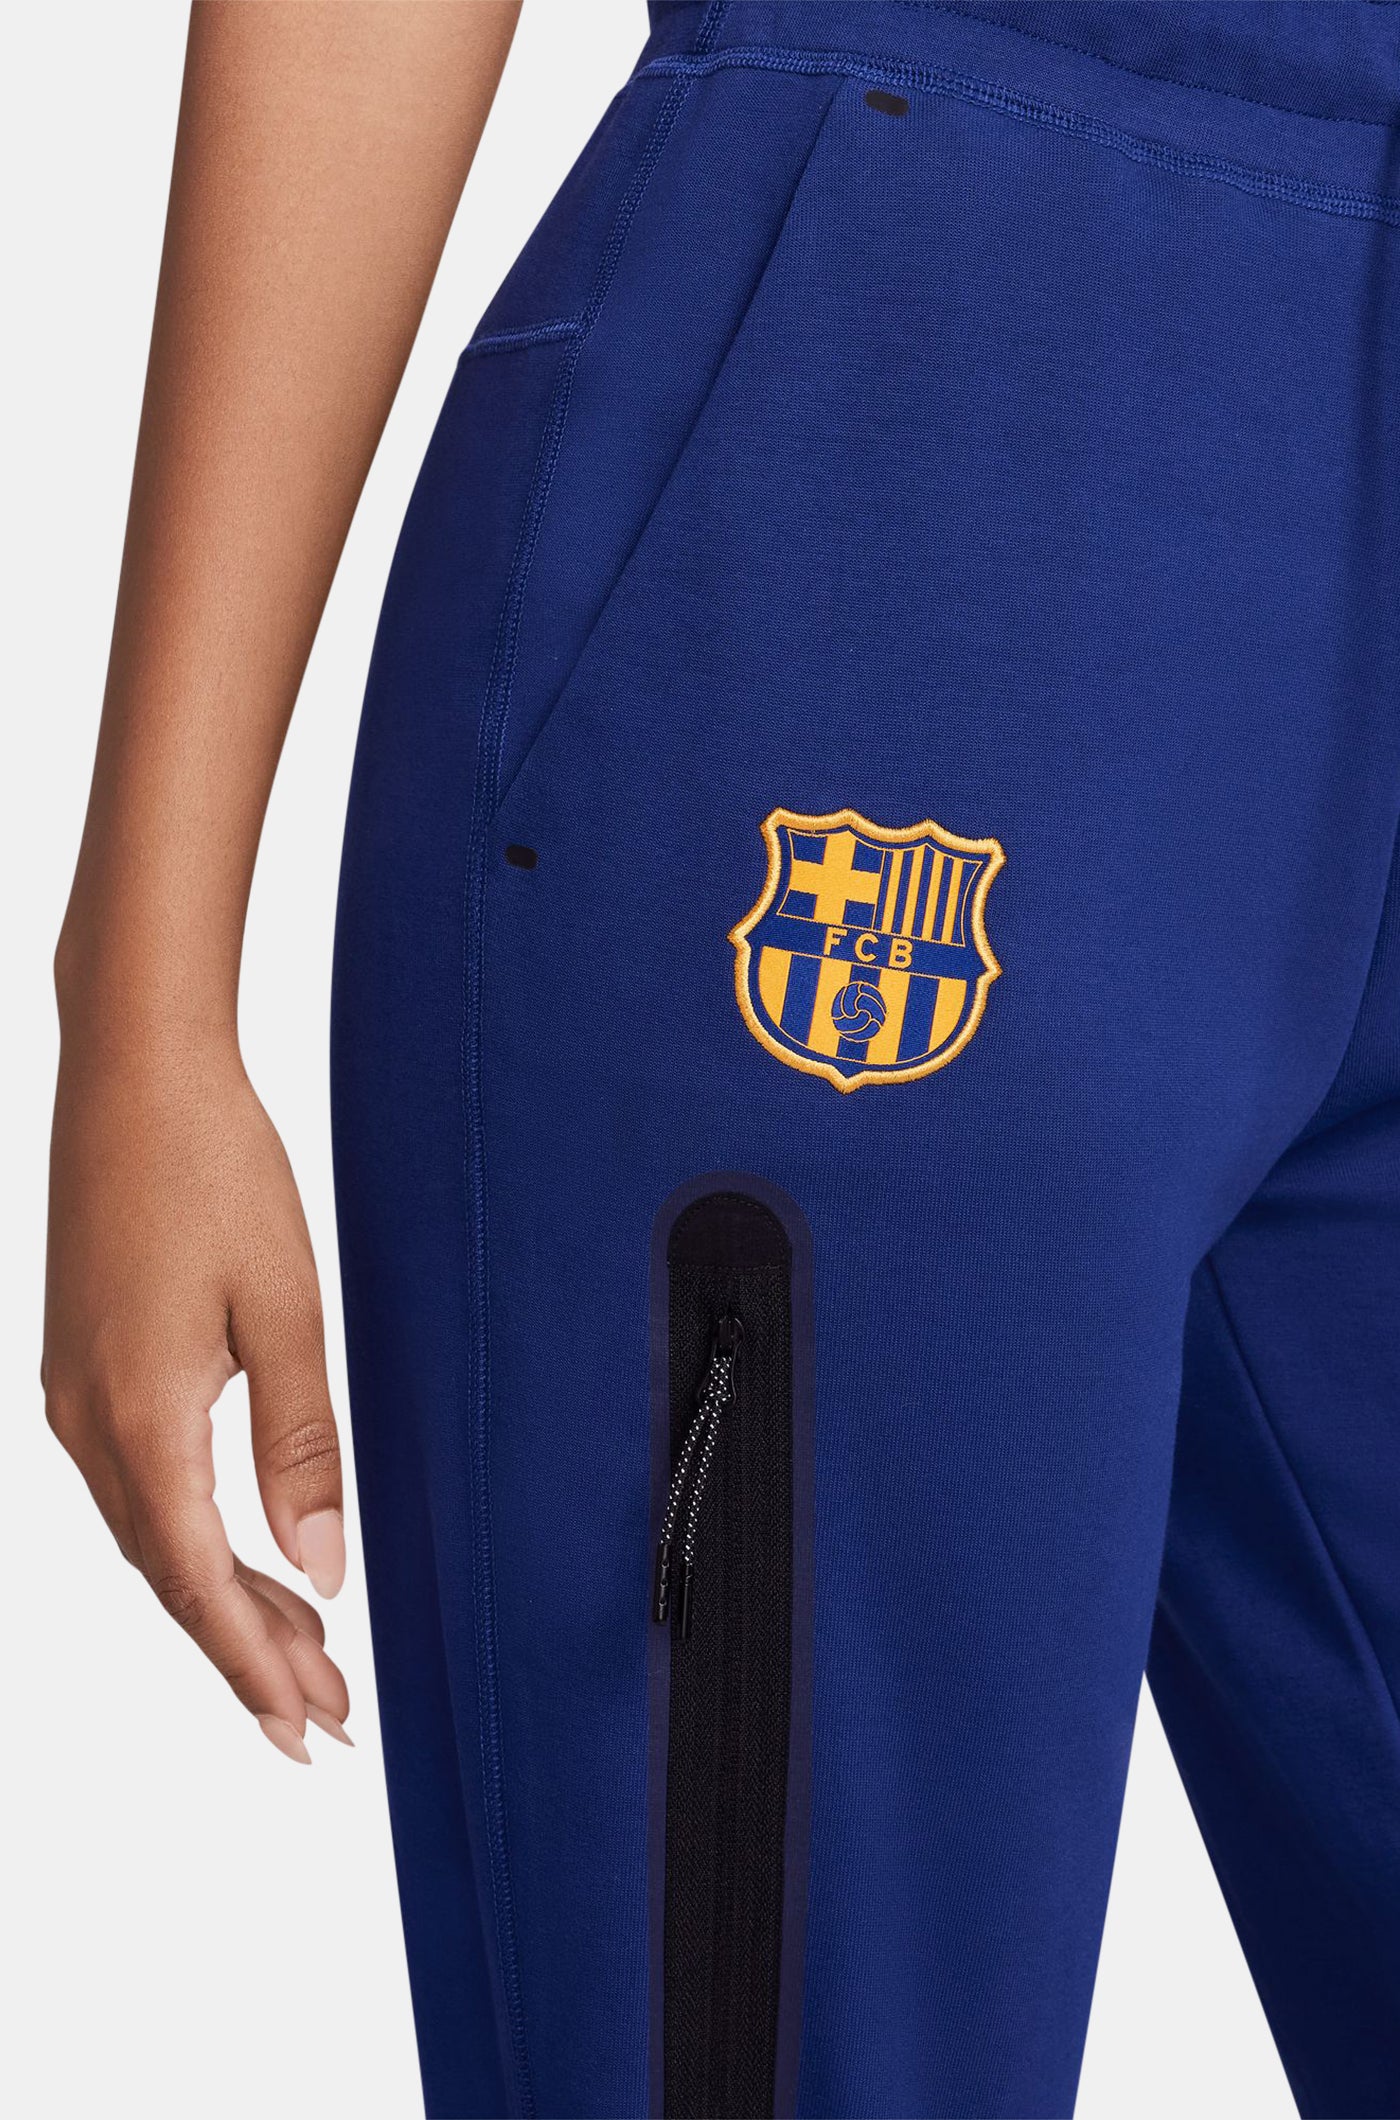 Pantaló tech blau Barça Nike - Dona